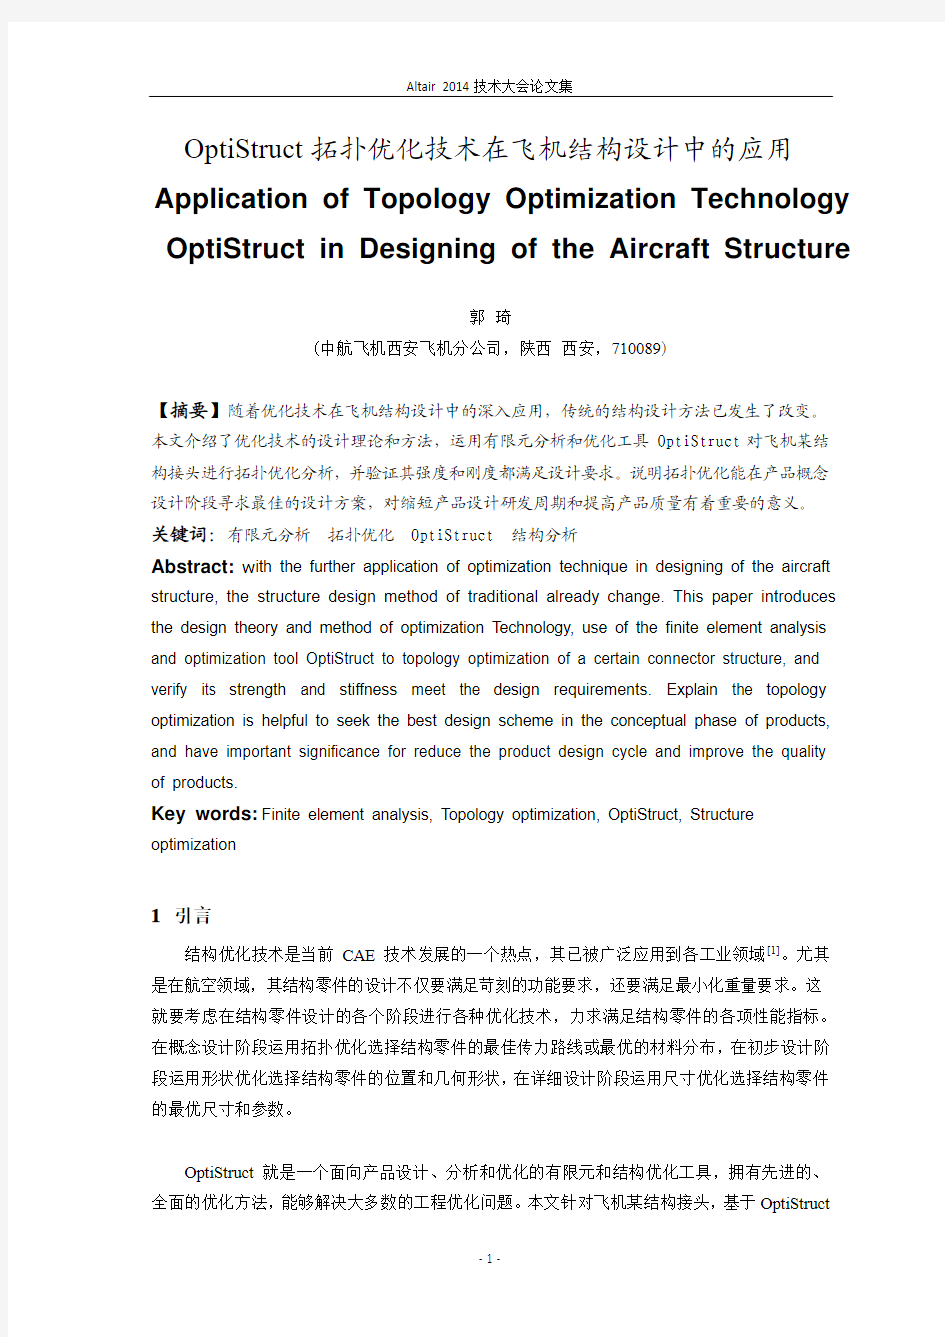 OptiStruct拓扑优化技术在飞机结构设计中的应用